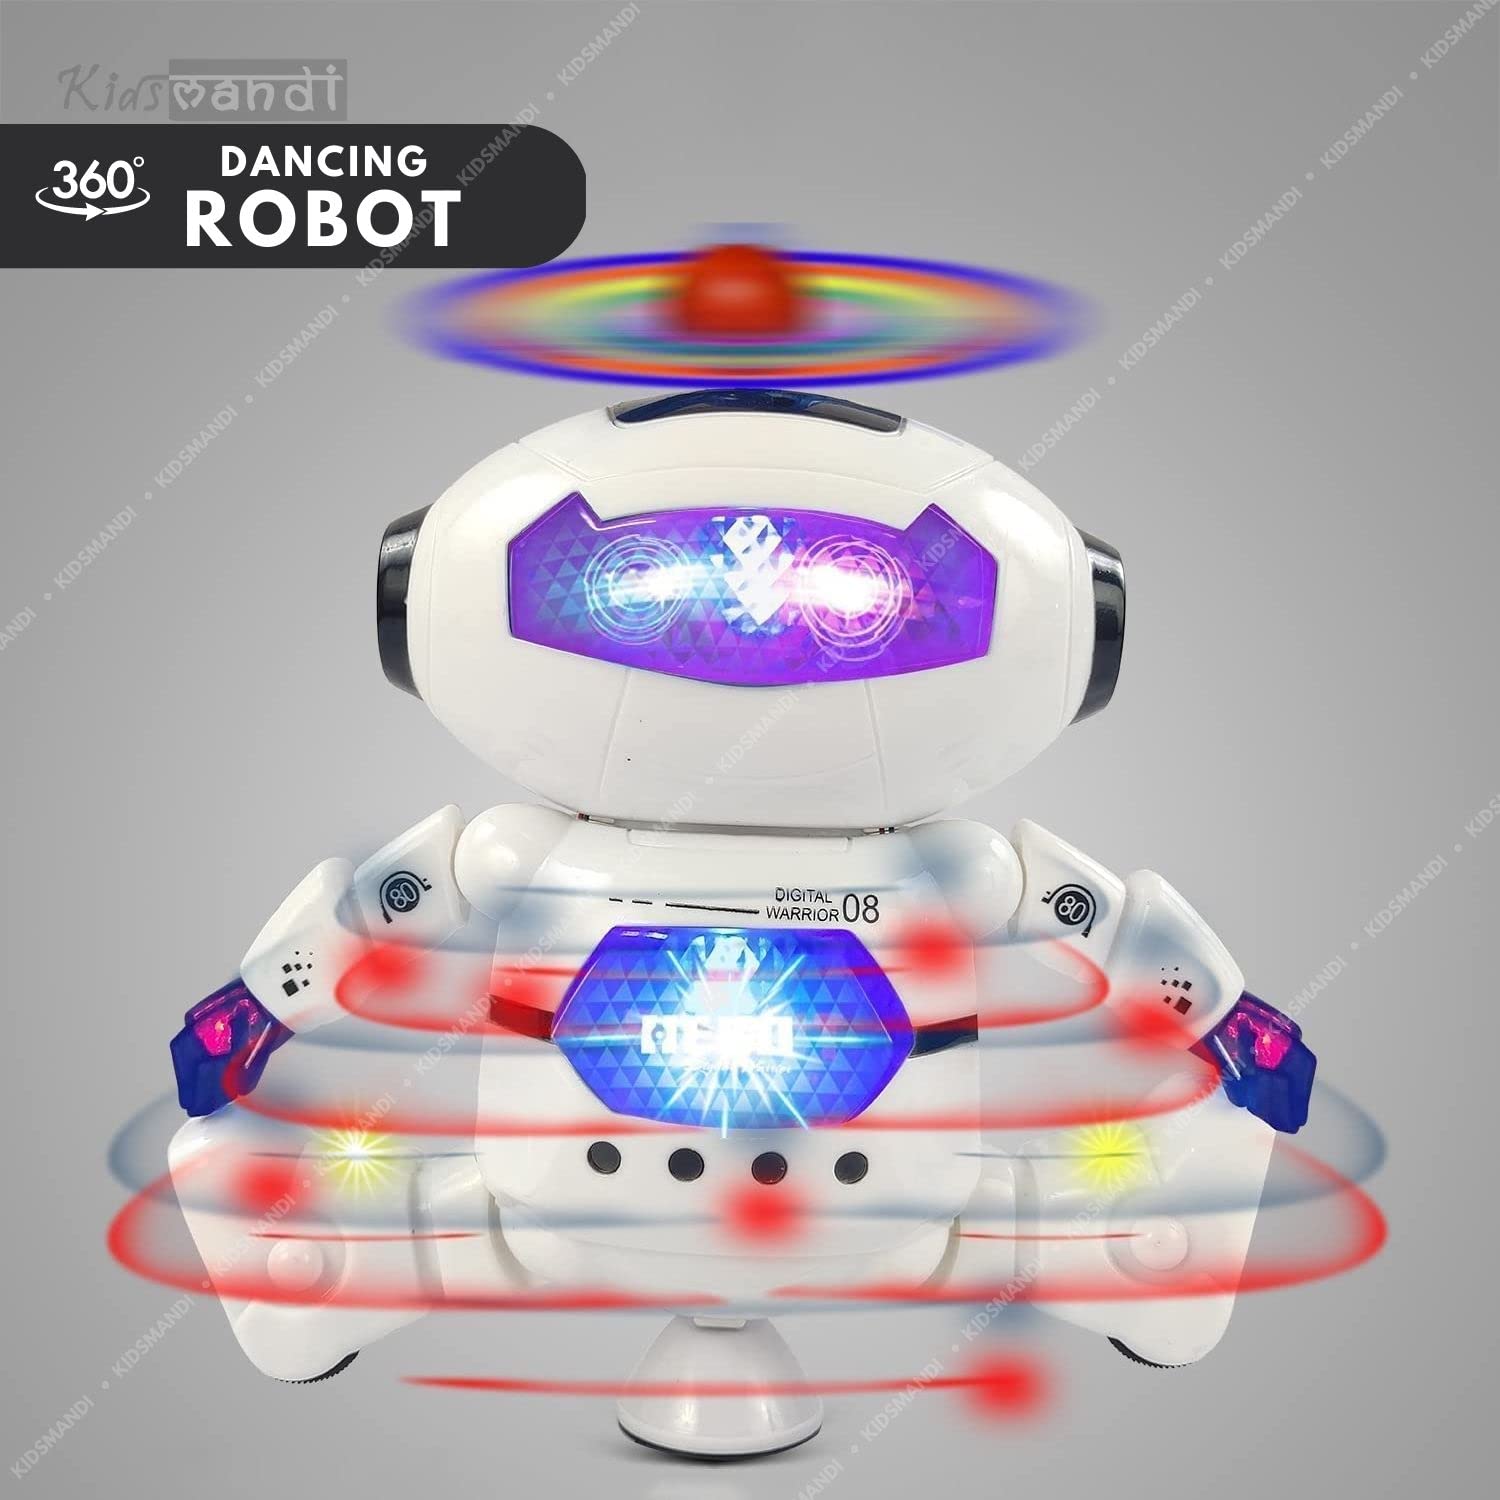 Kids Mandi amazing toy robot with music, lights, and movements.